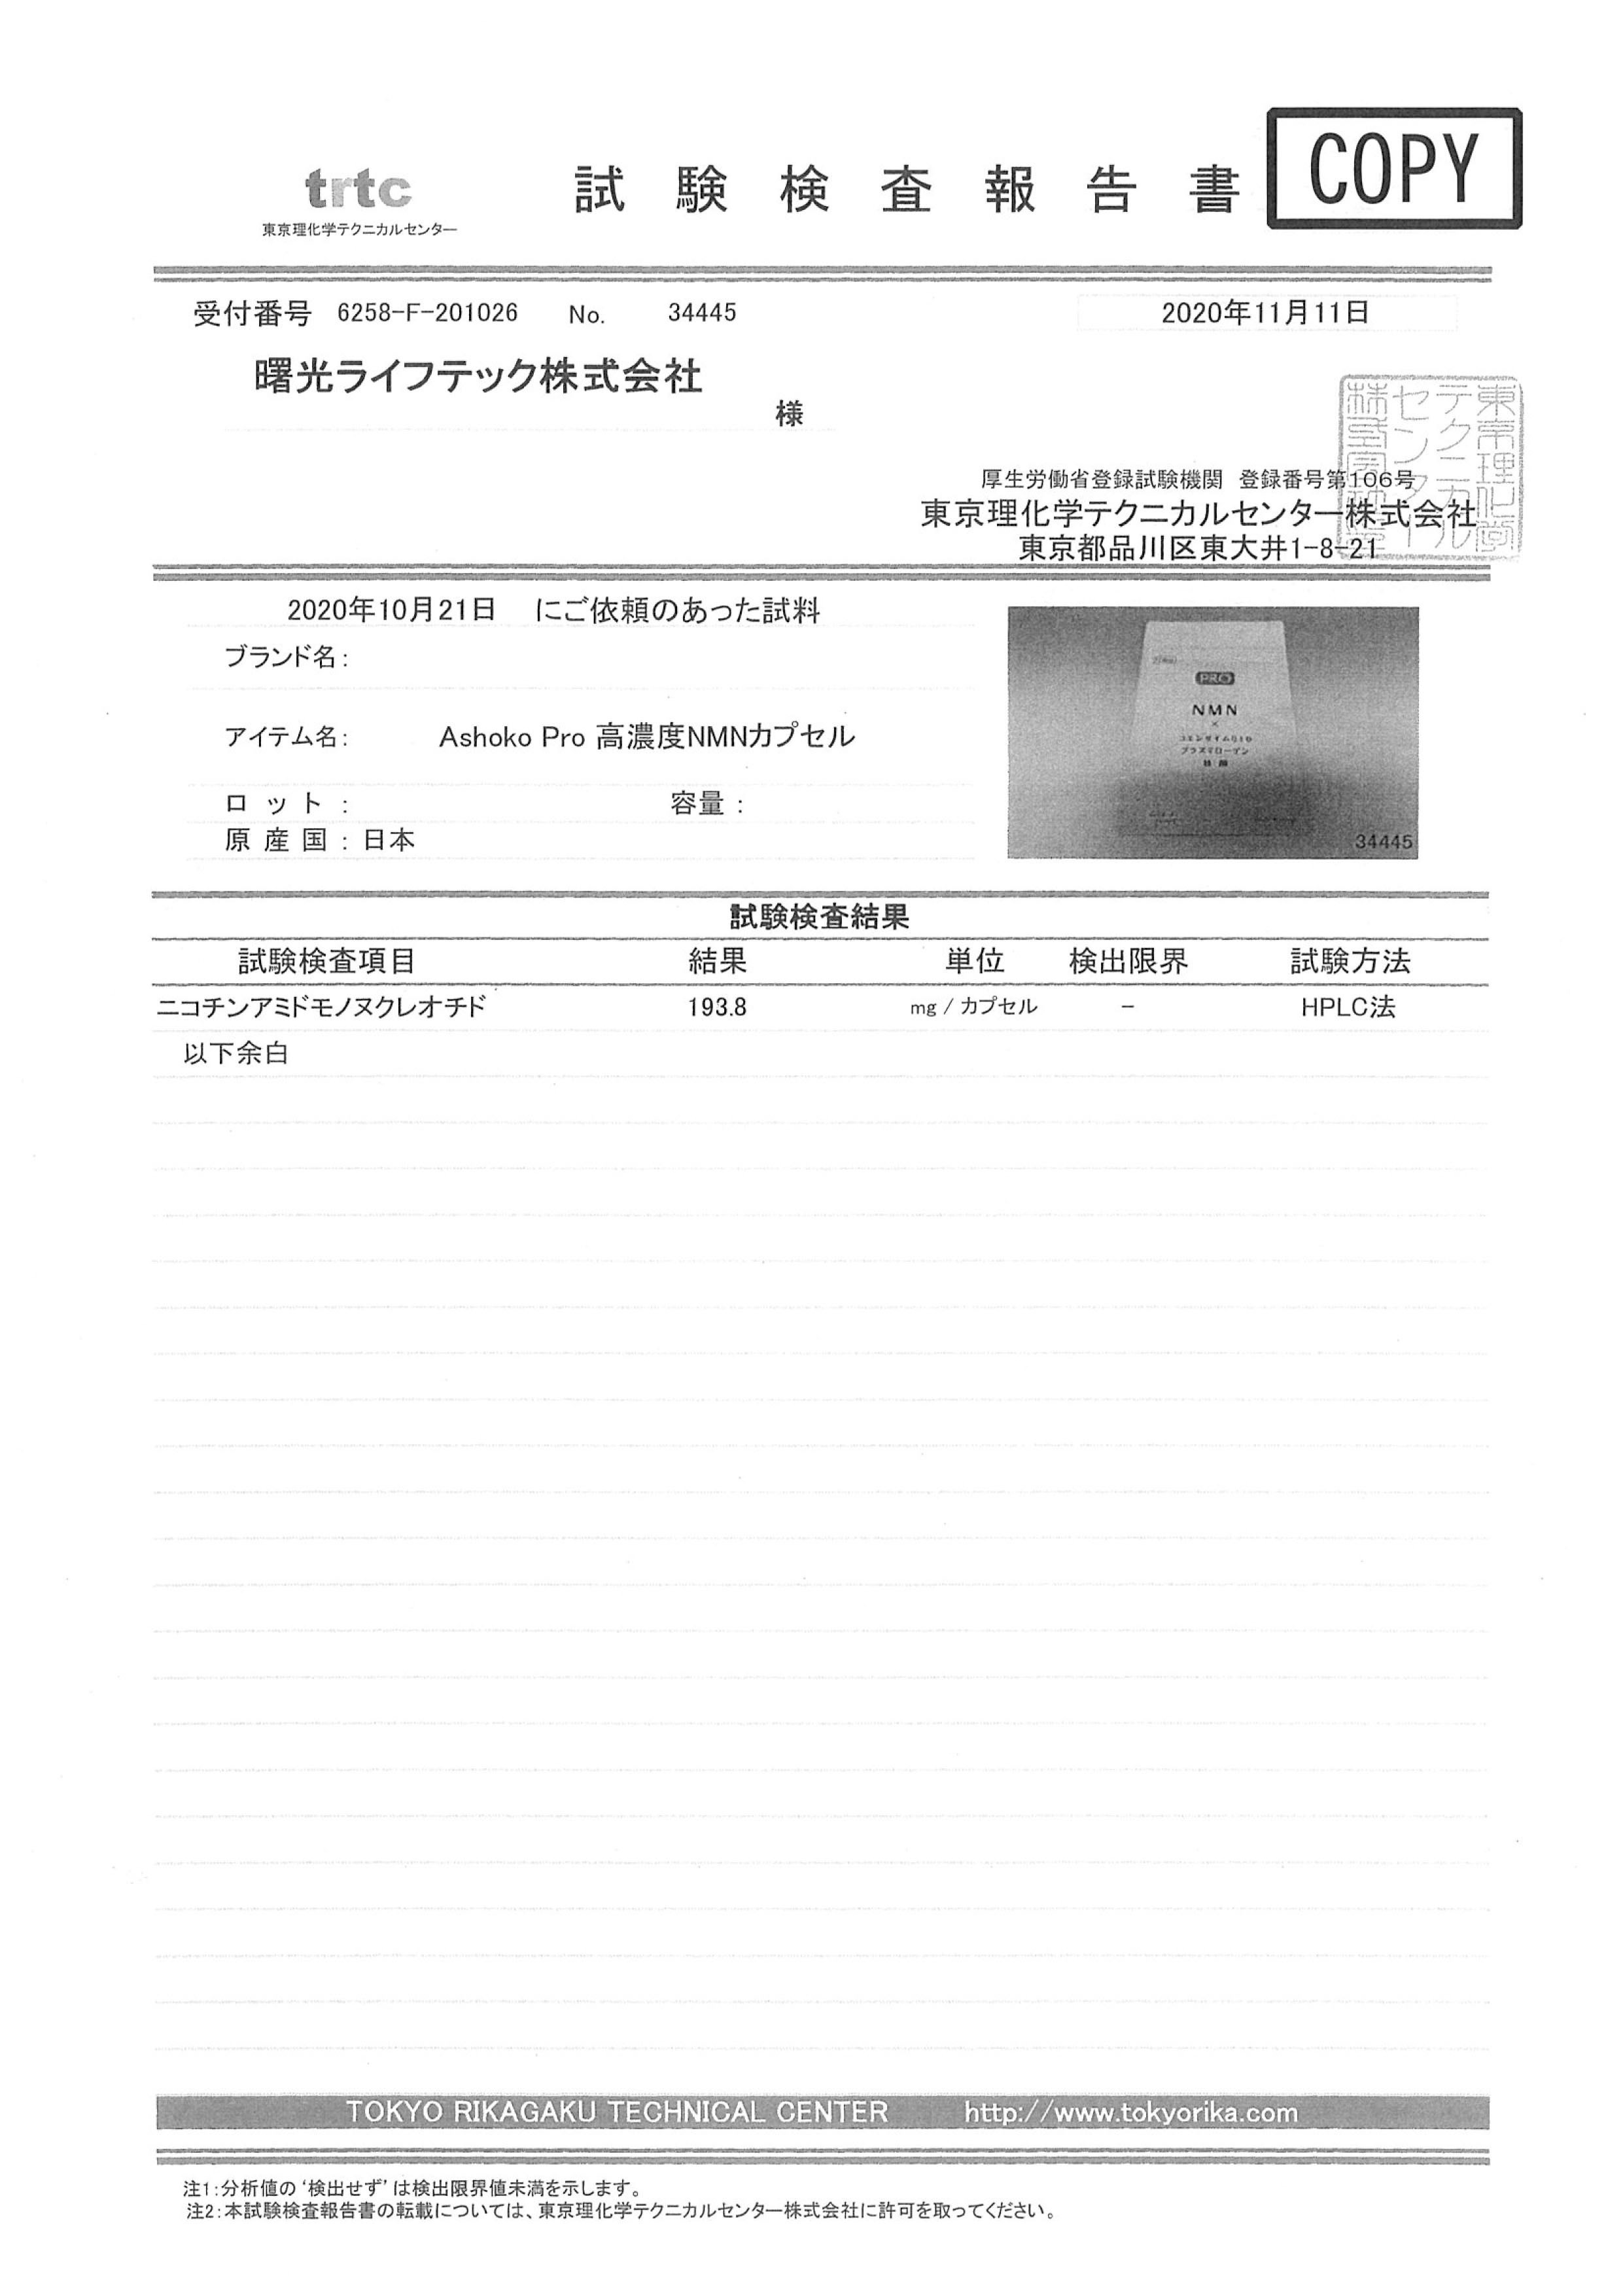 ASHOKO产品获得東京理化学テクニカルセンター权威检测认证(图2)